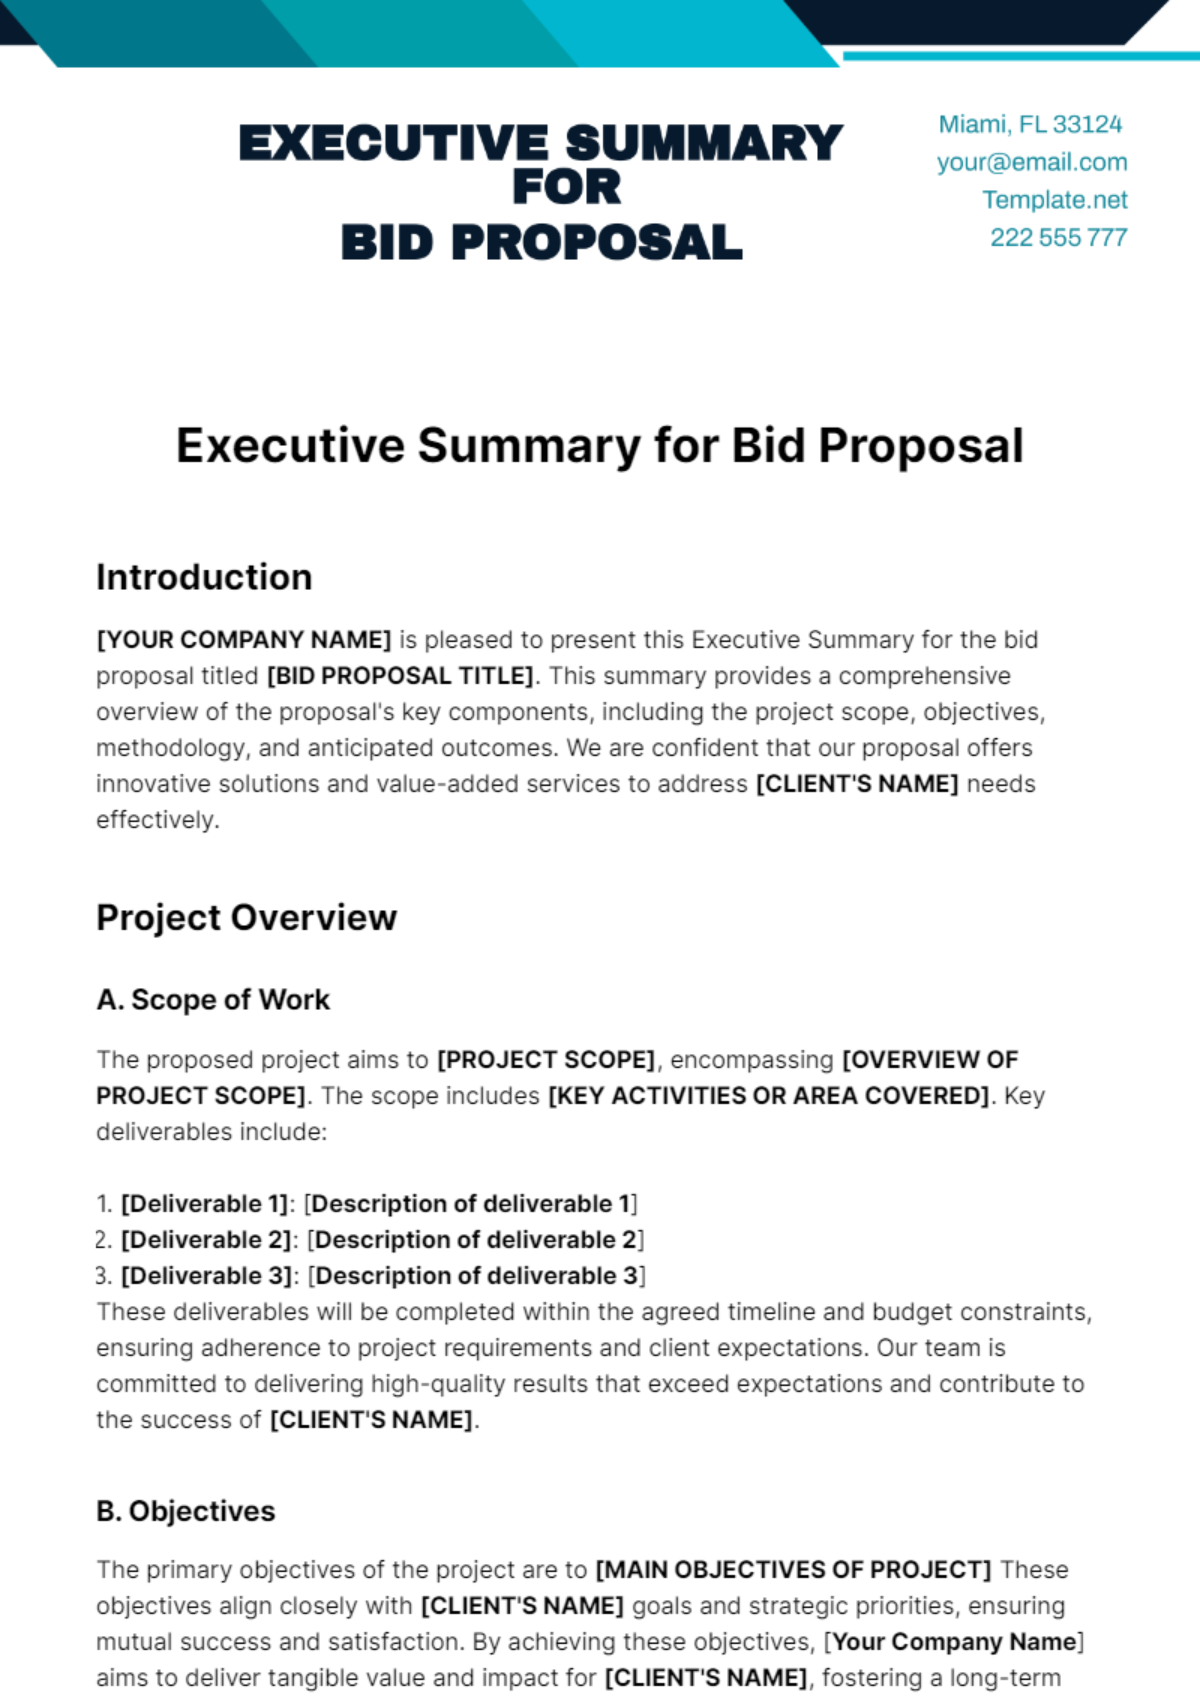 Executive Summary for Bid Proposal Template